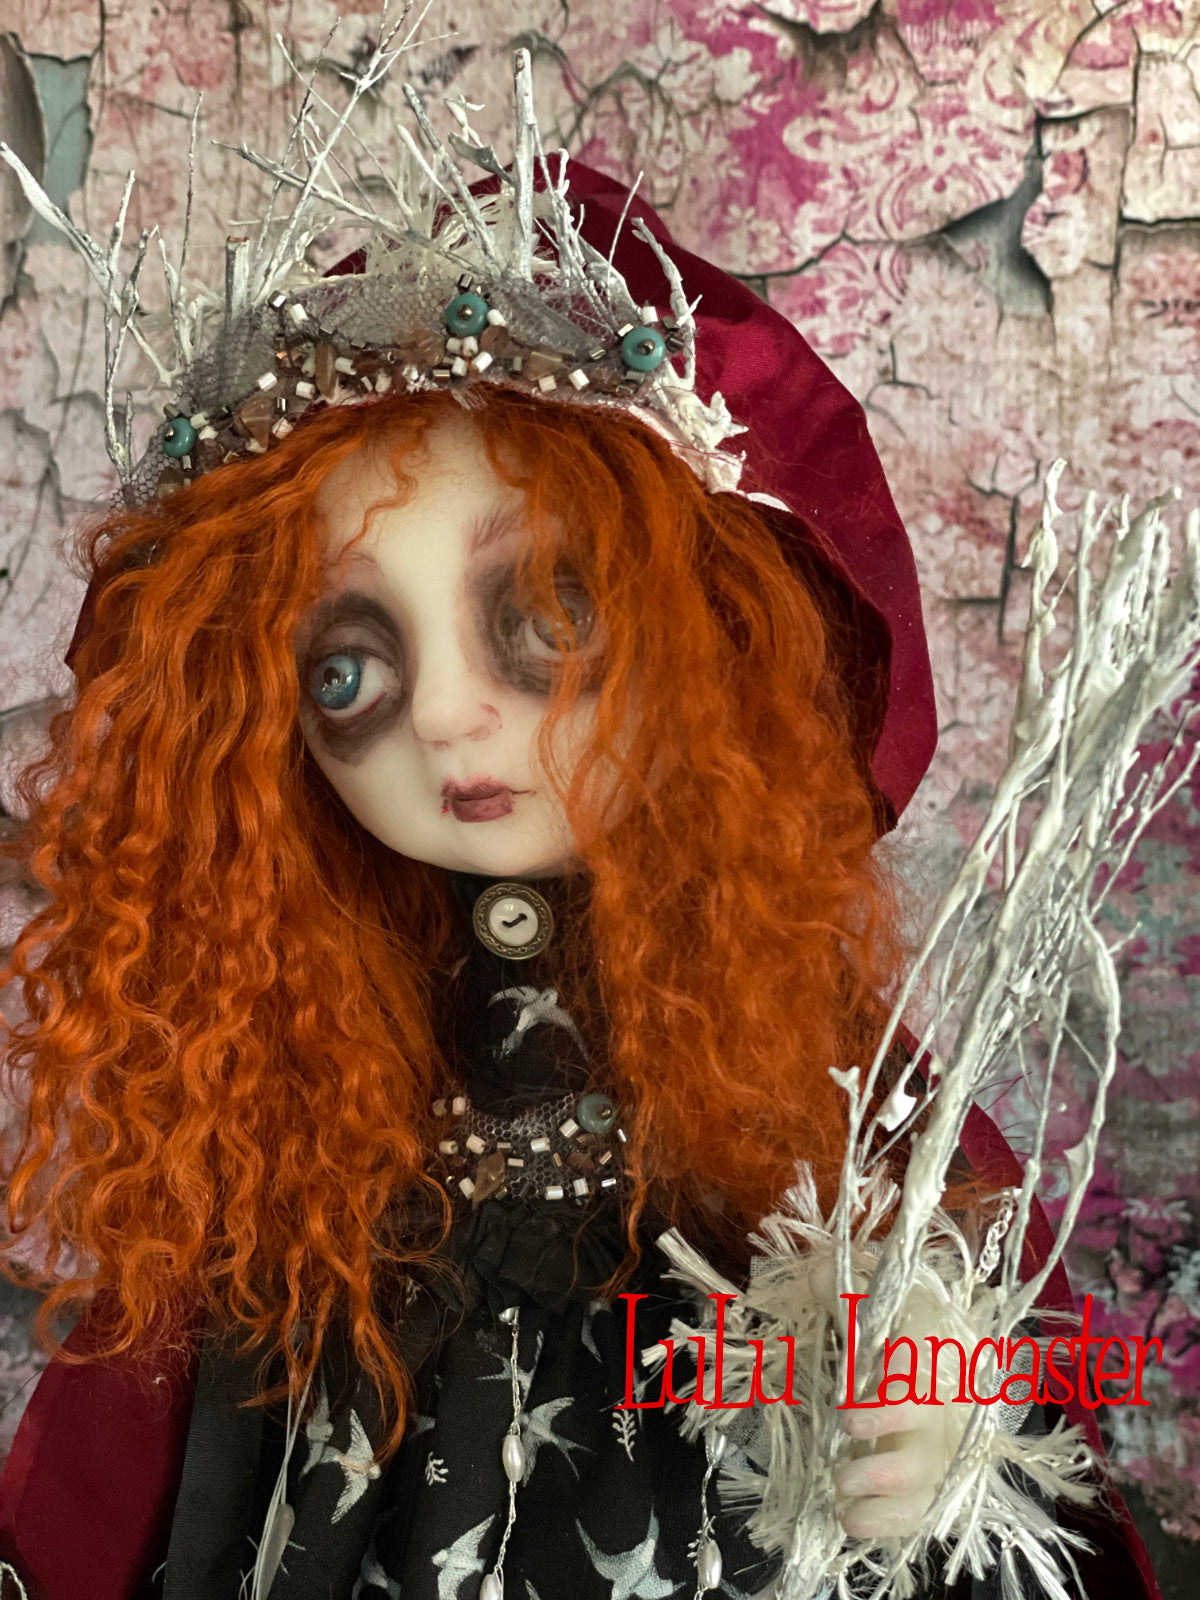 Marlo the Winter Witch Original LuLu Lancaster Art Doll